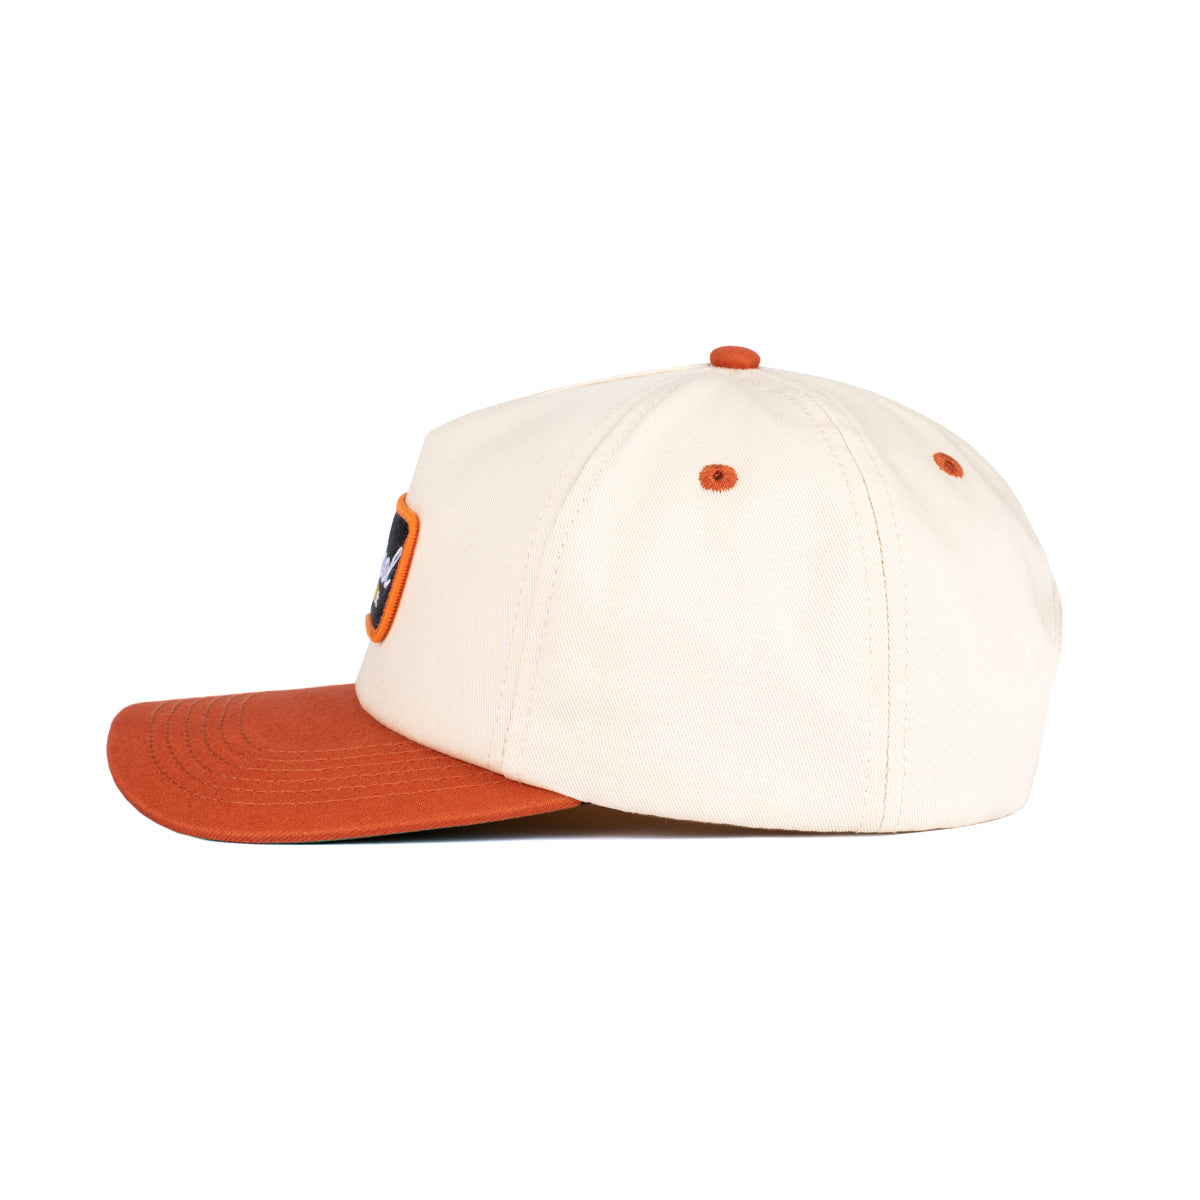 Barstool Scottsdale Retro Snapback Hat-Hats-Barstool Sports-Cream-One Size-Barstool Sports